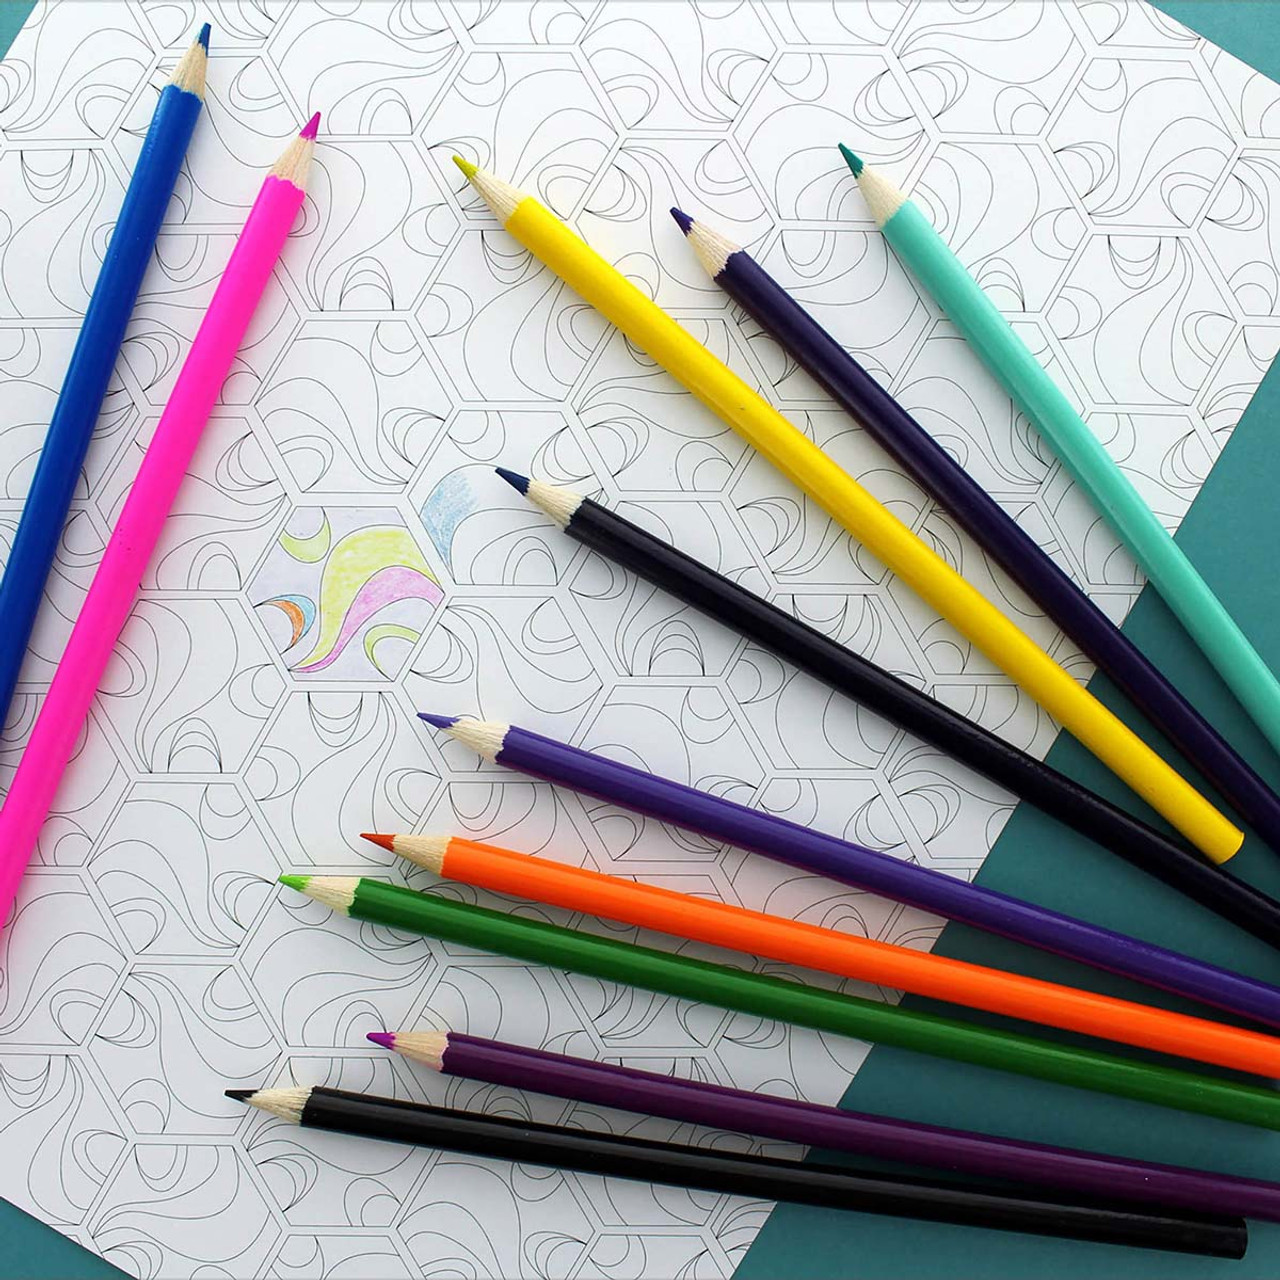 Colored Pencil Kit – Susan B. Anthony Museum & House Shop